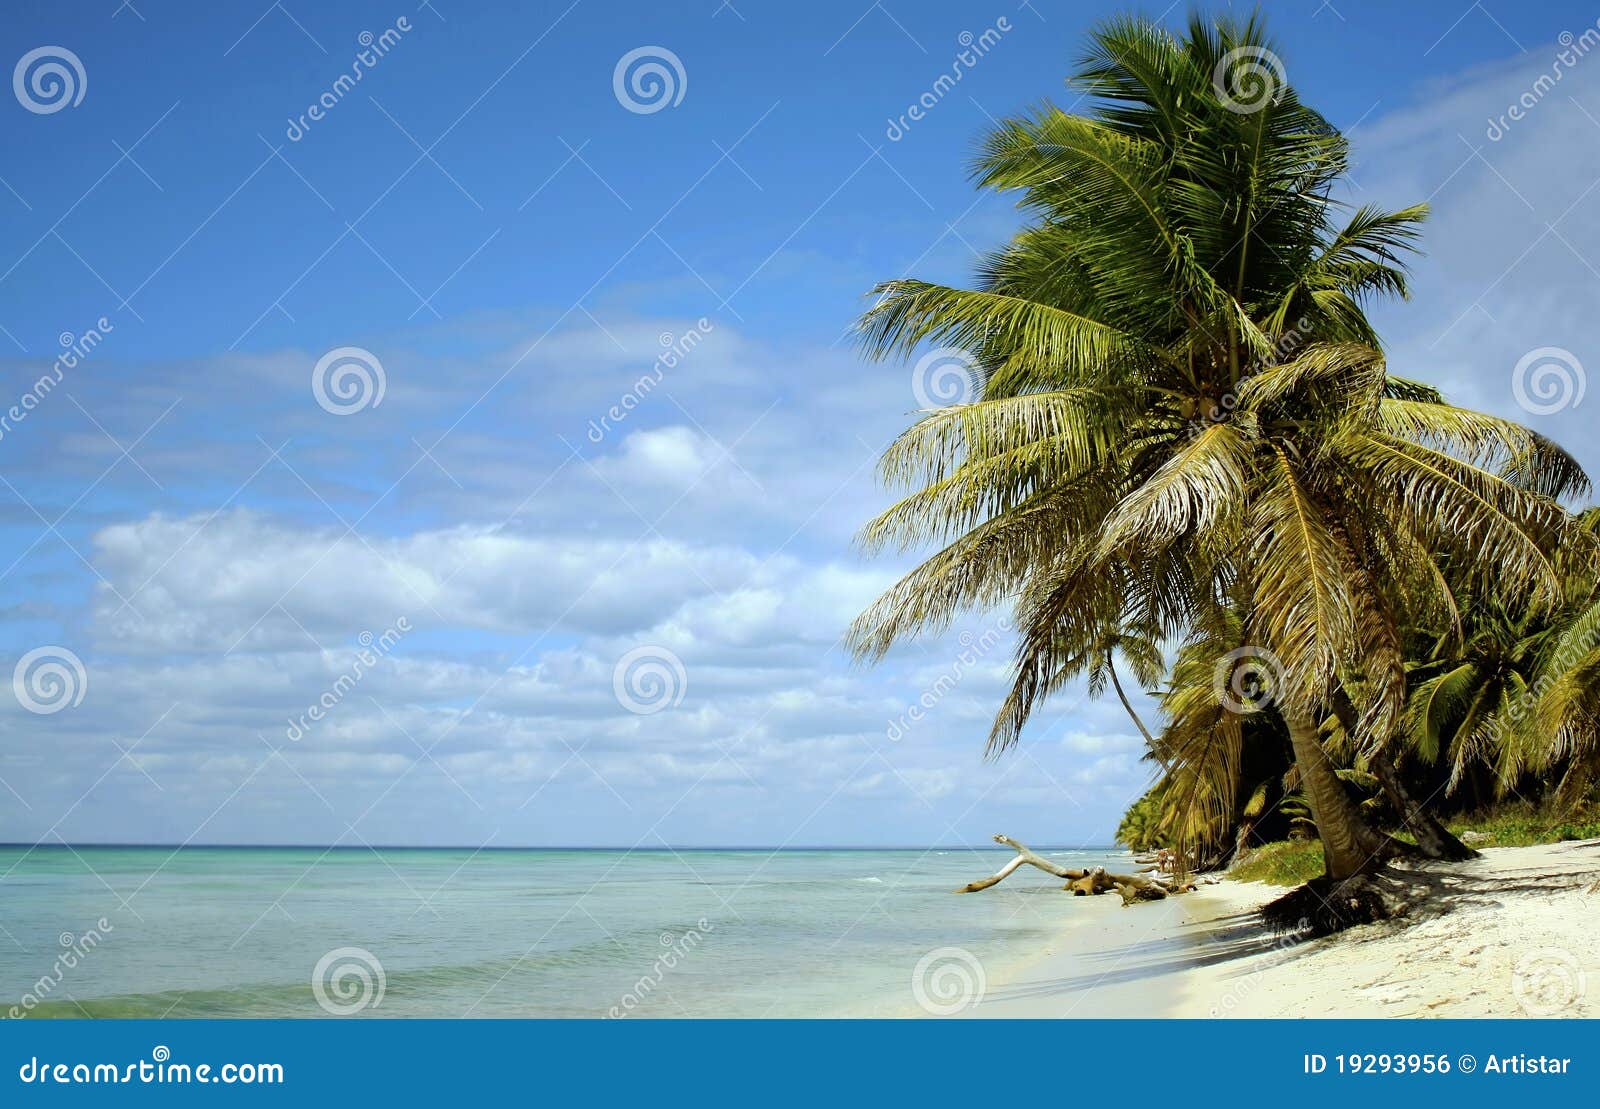 Caribean paradise. Saona island beach in dominican republic